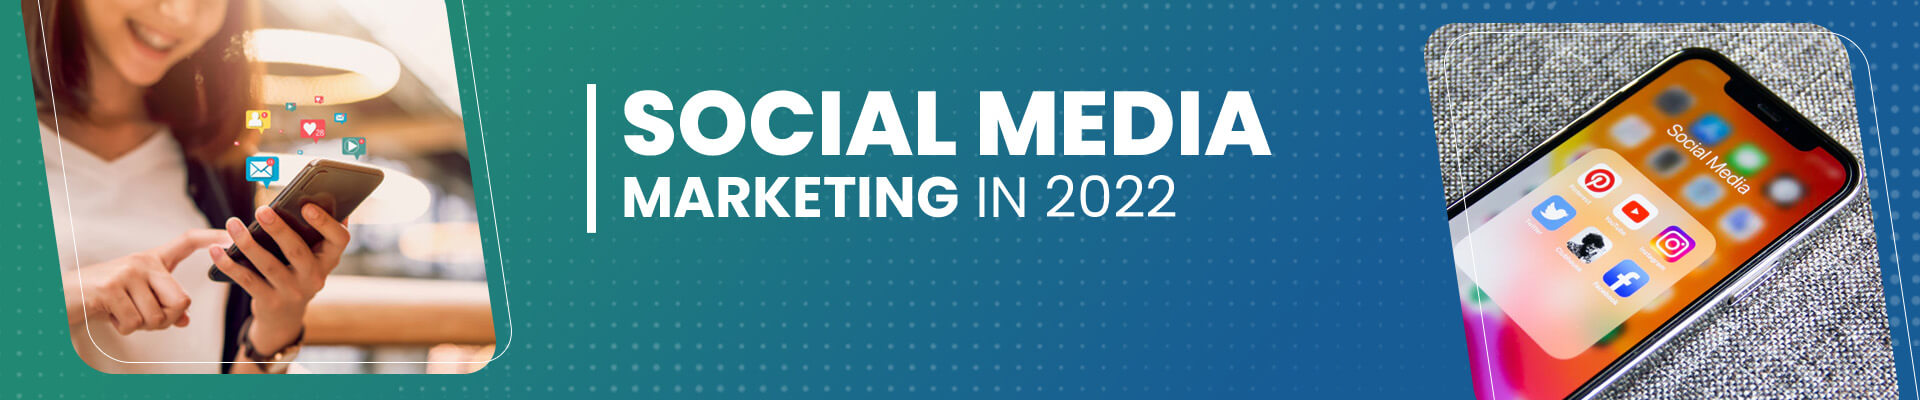 How To Do Social Media Marketing? [Ultimate Social Media Guide 2022]